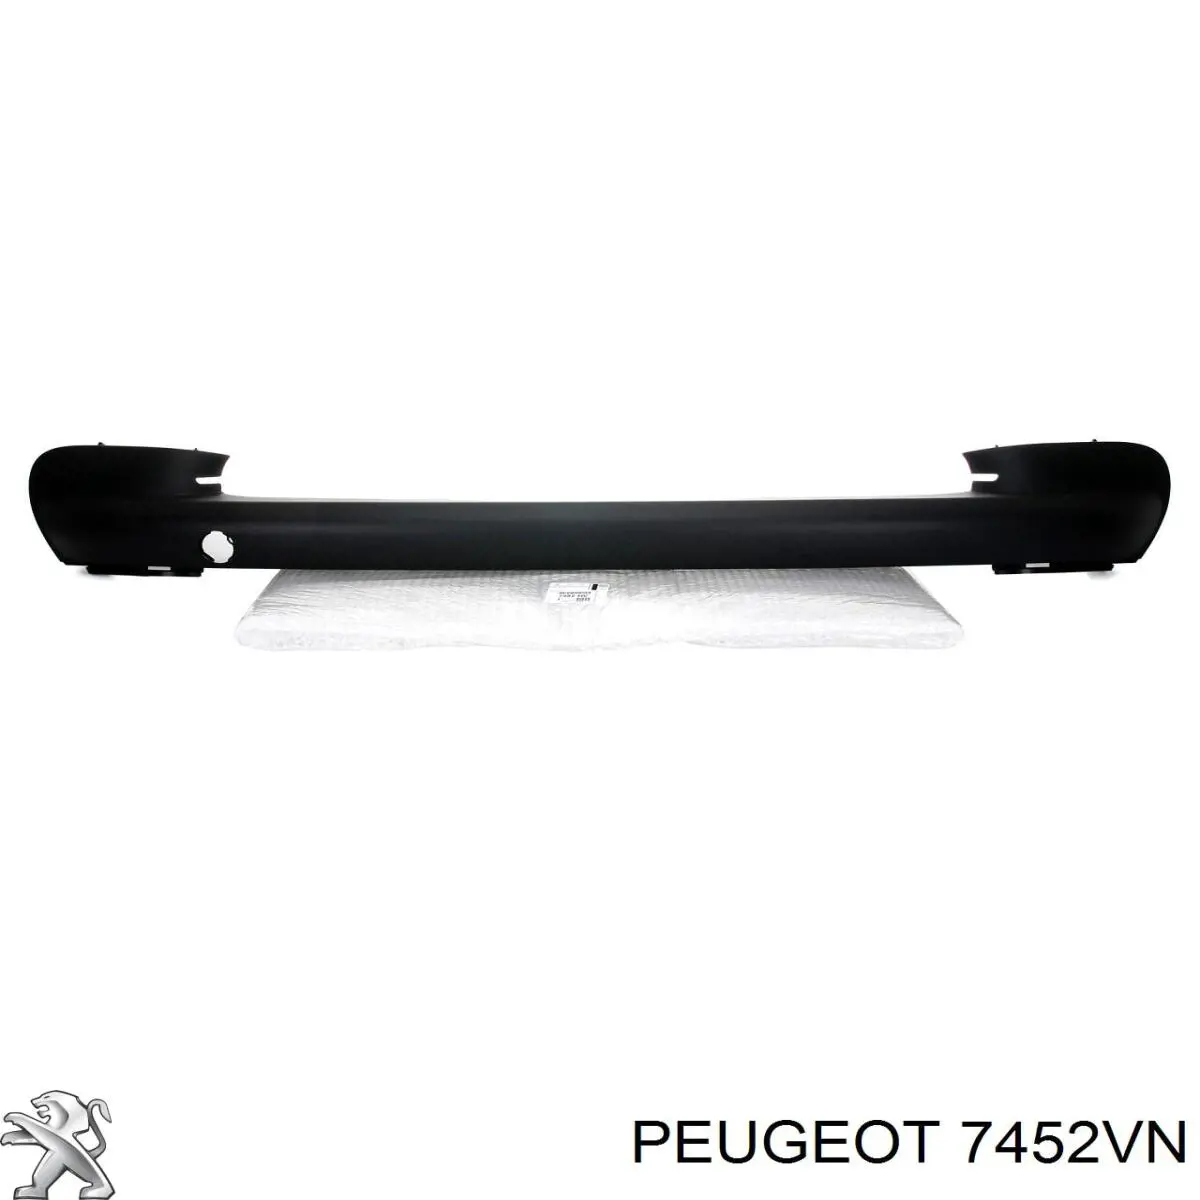 7452VN Peugeot/Citroen placa sobreposta (carcaça de grelha do radiador)